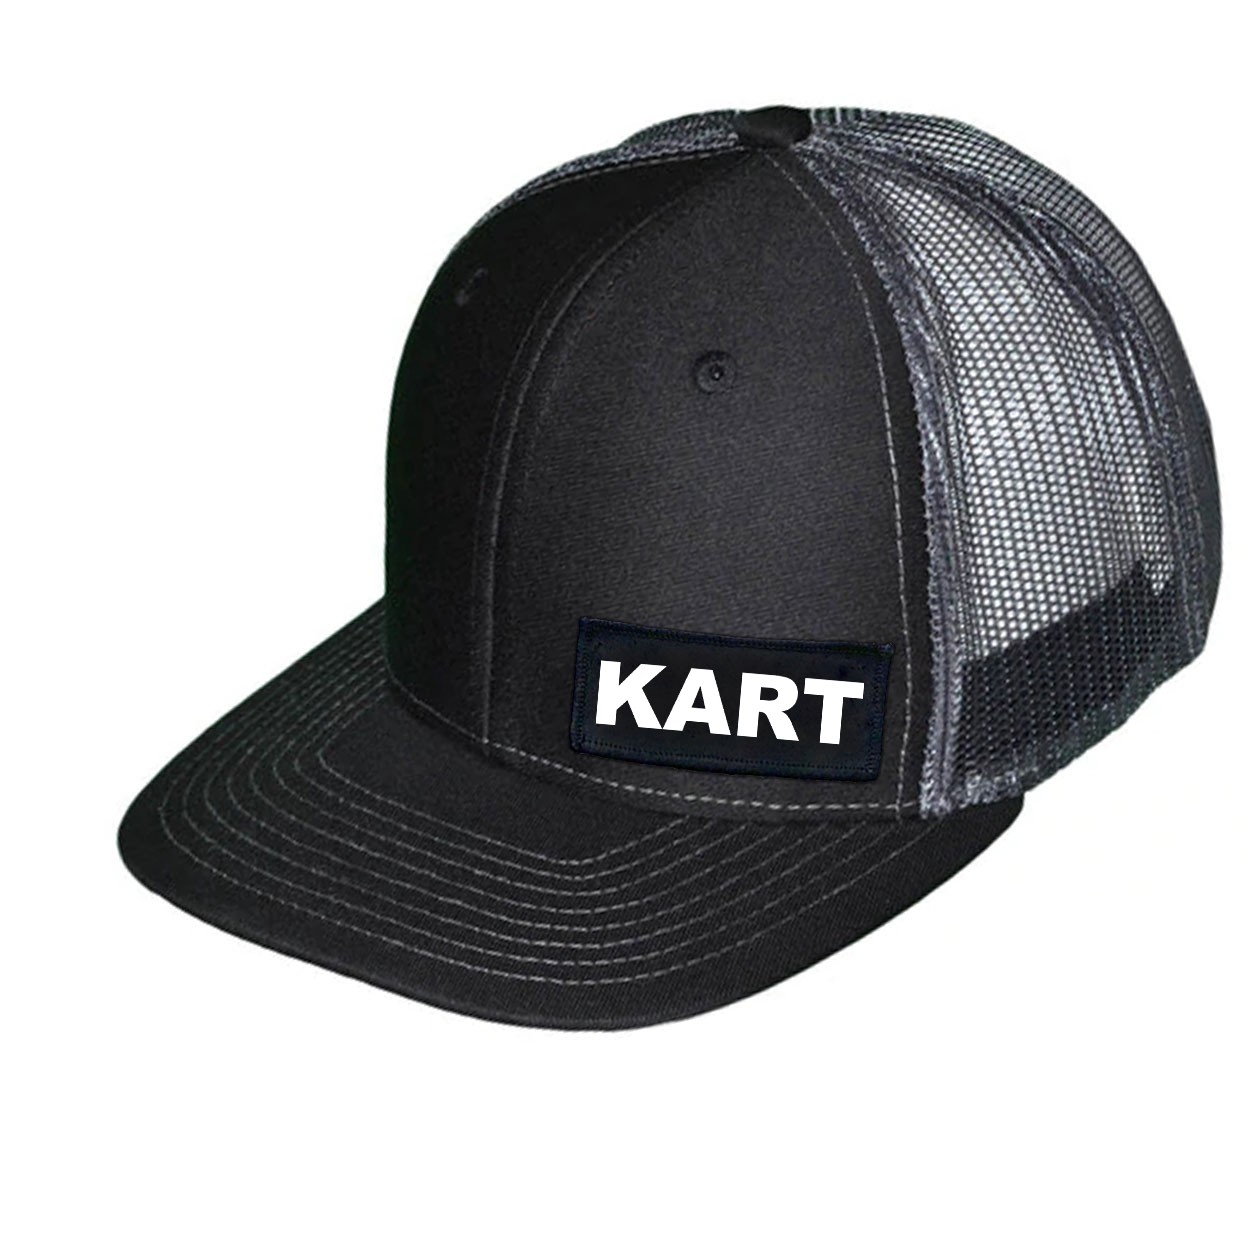 Kart Brand Logo Night Out Woven Patch Snapback Trucker Hat Black/Gray